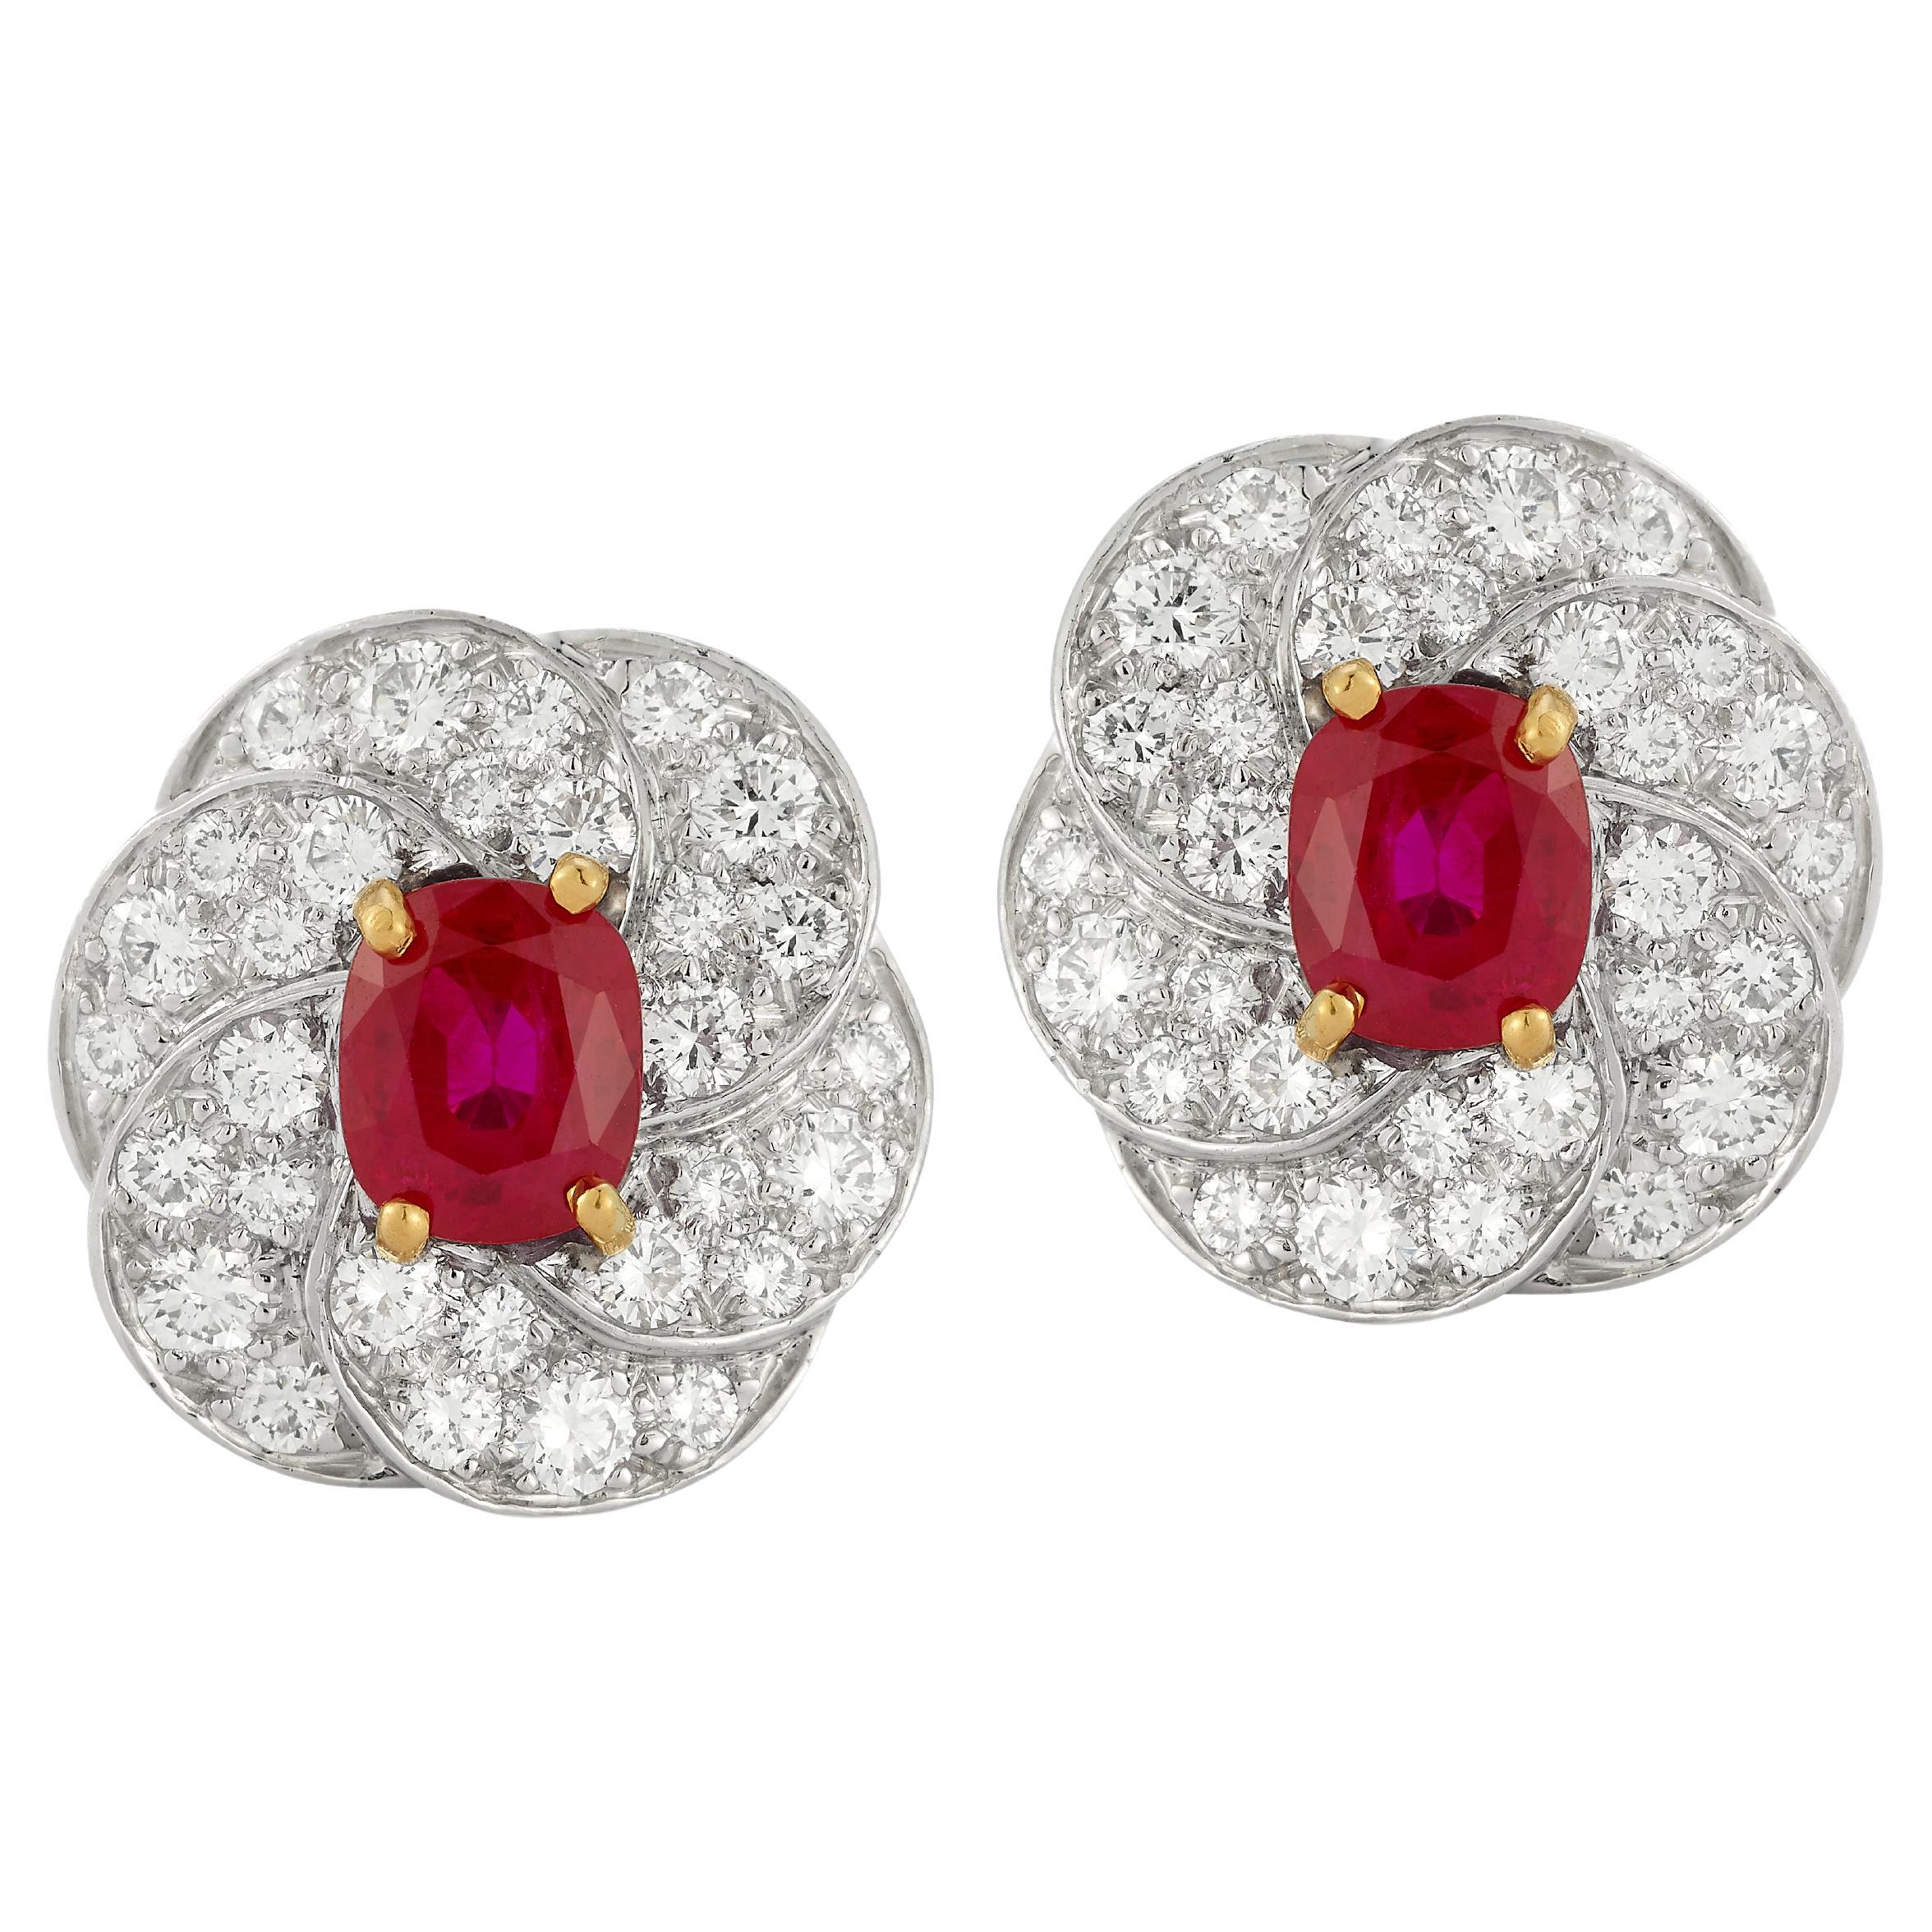 Oscar Heyman Brothers Certified Burmese Ruby & Diamond Earrings For Sale